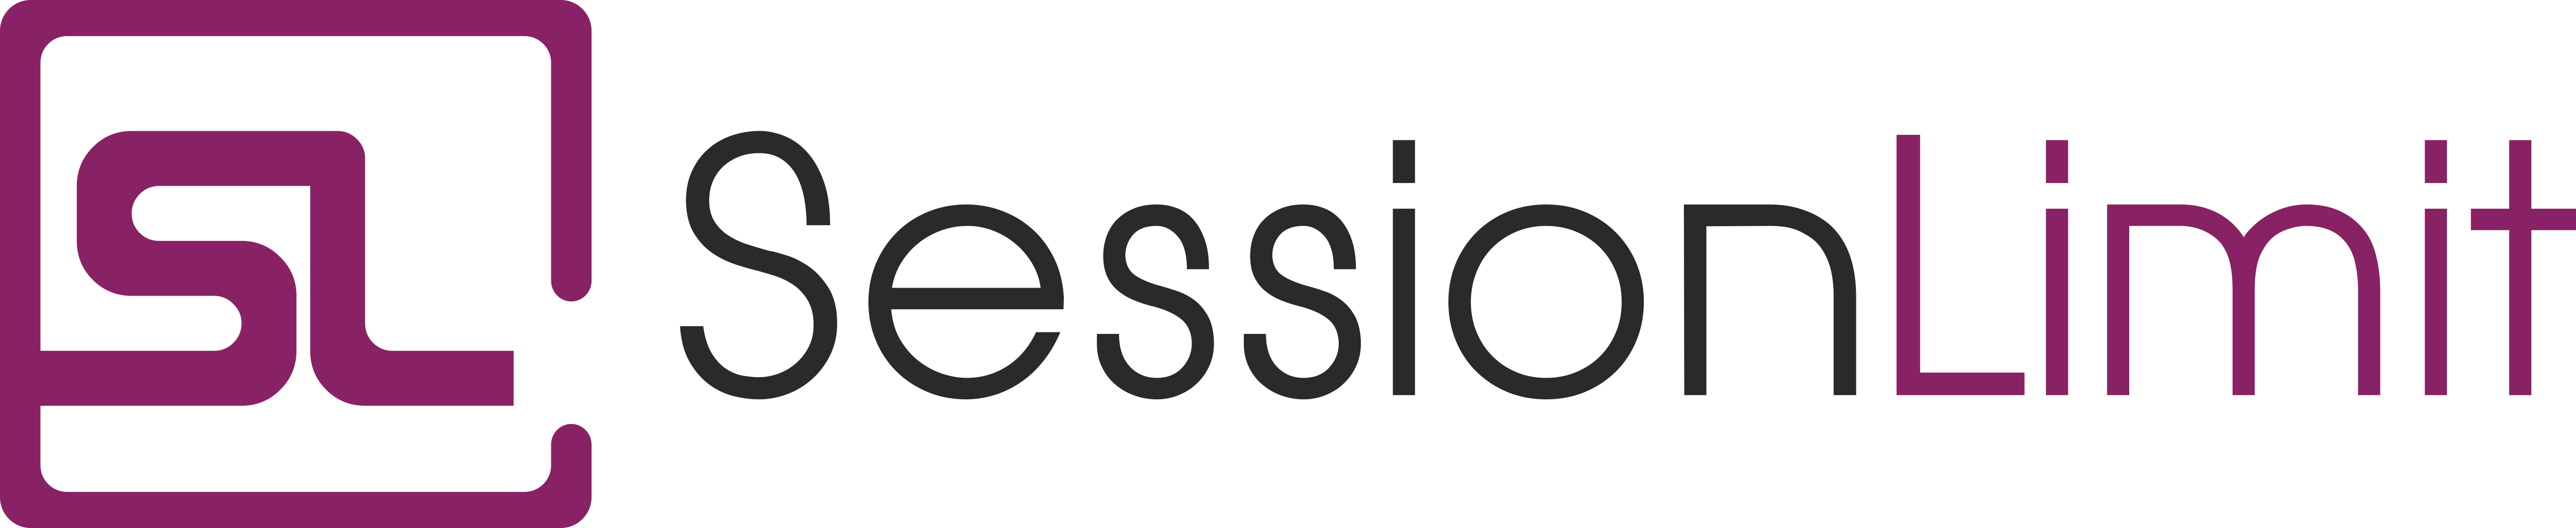 Session Limit Logo